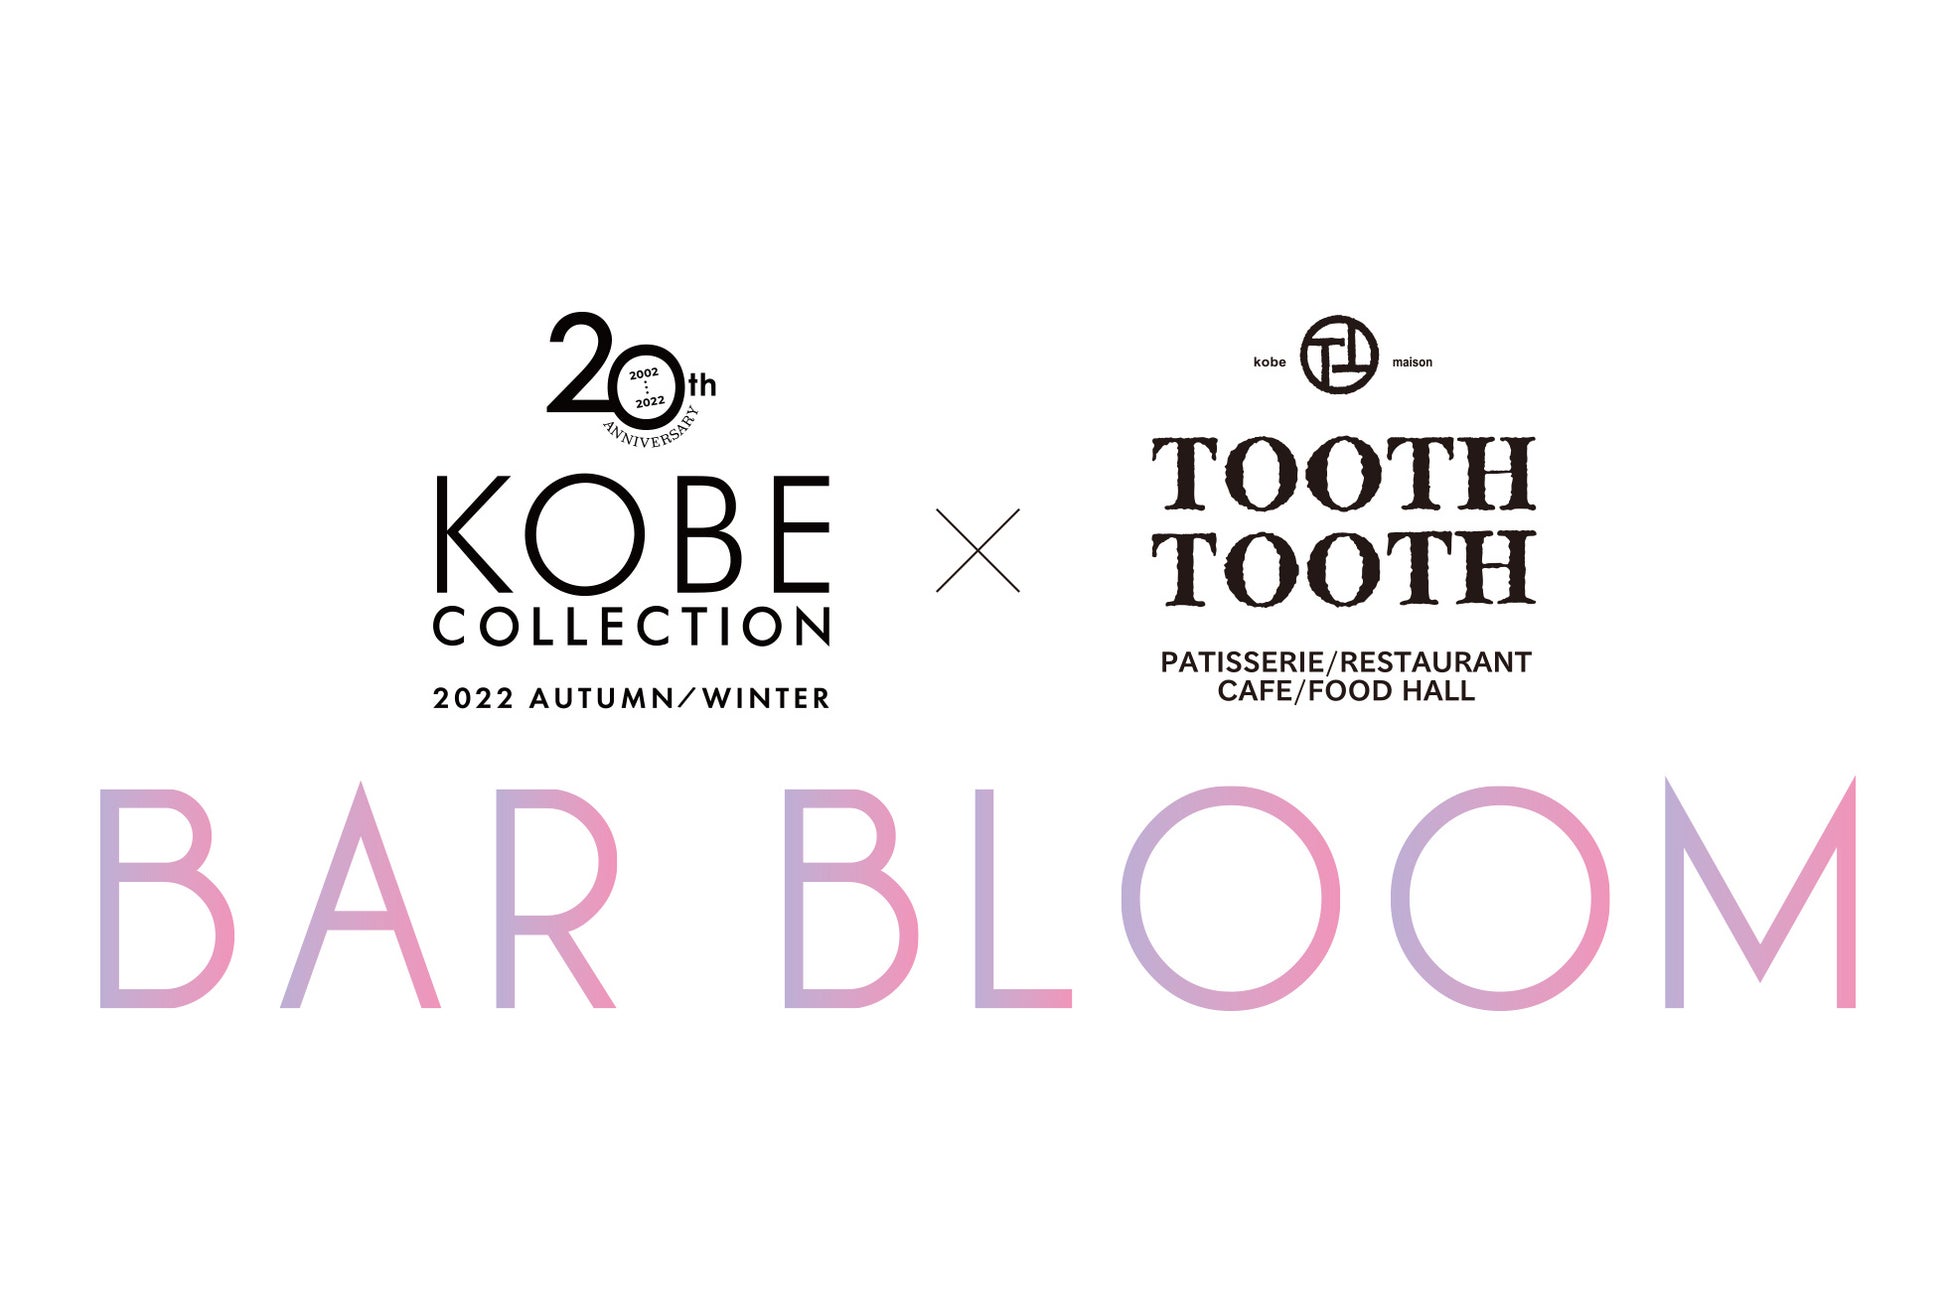 KOBE COLLECTION×TOOTH TOOTHのコラボ！20周年記念オフィシャルバー『BAR BLOOM』が9/23-25の期間限定でオープン！